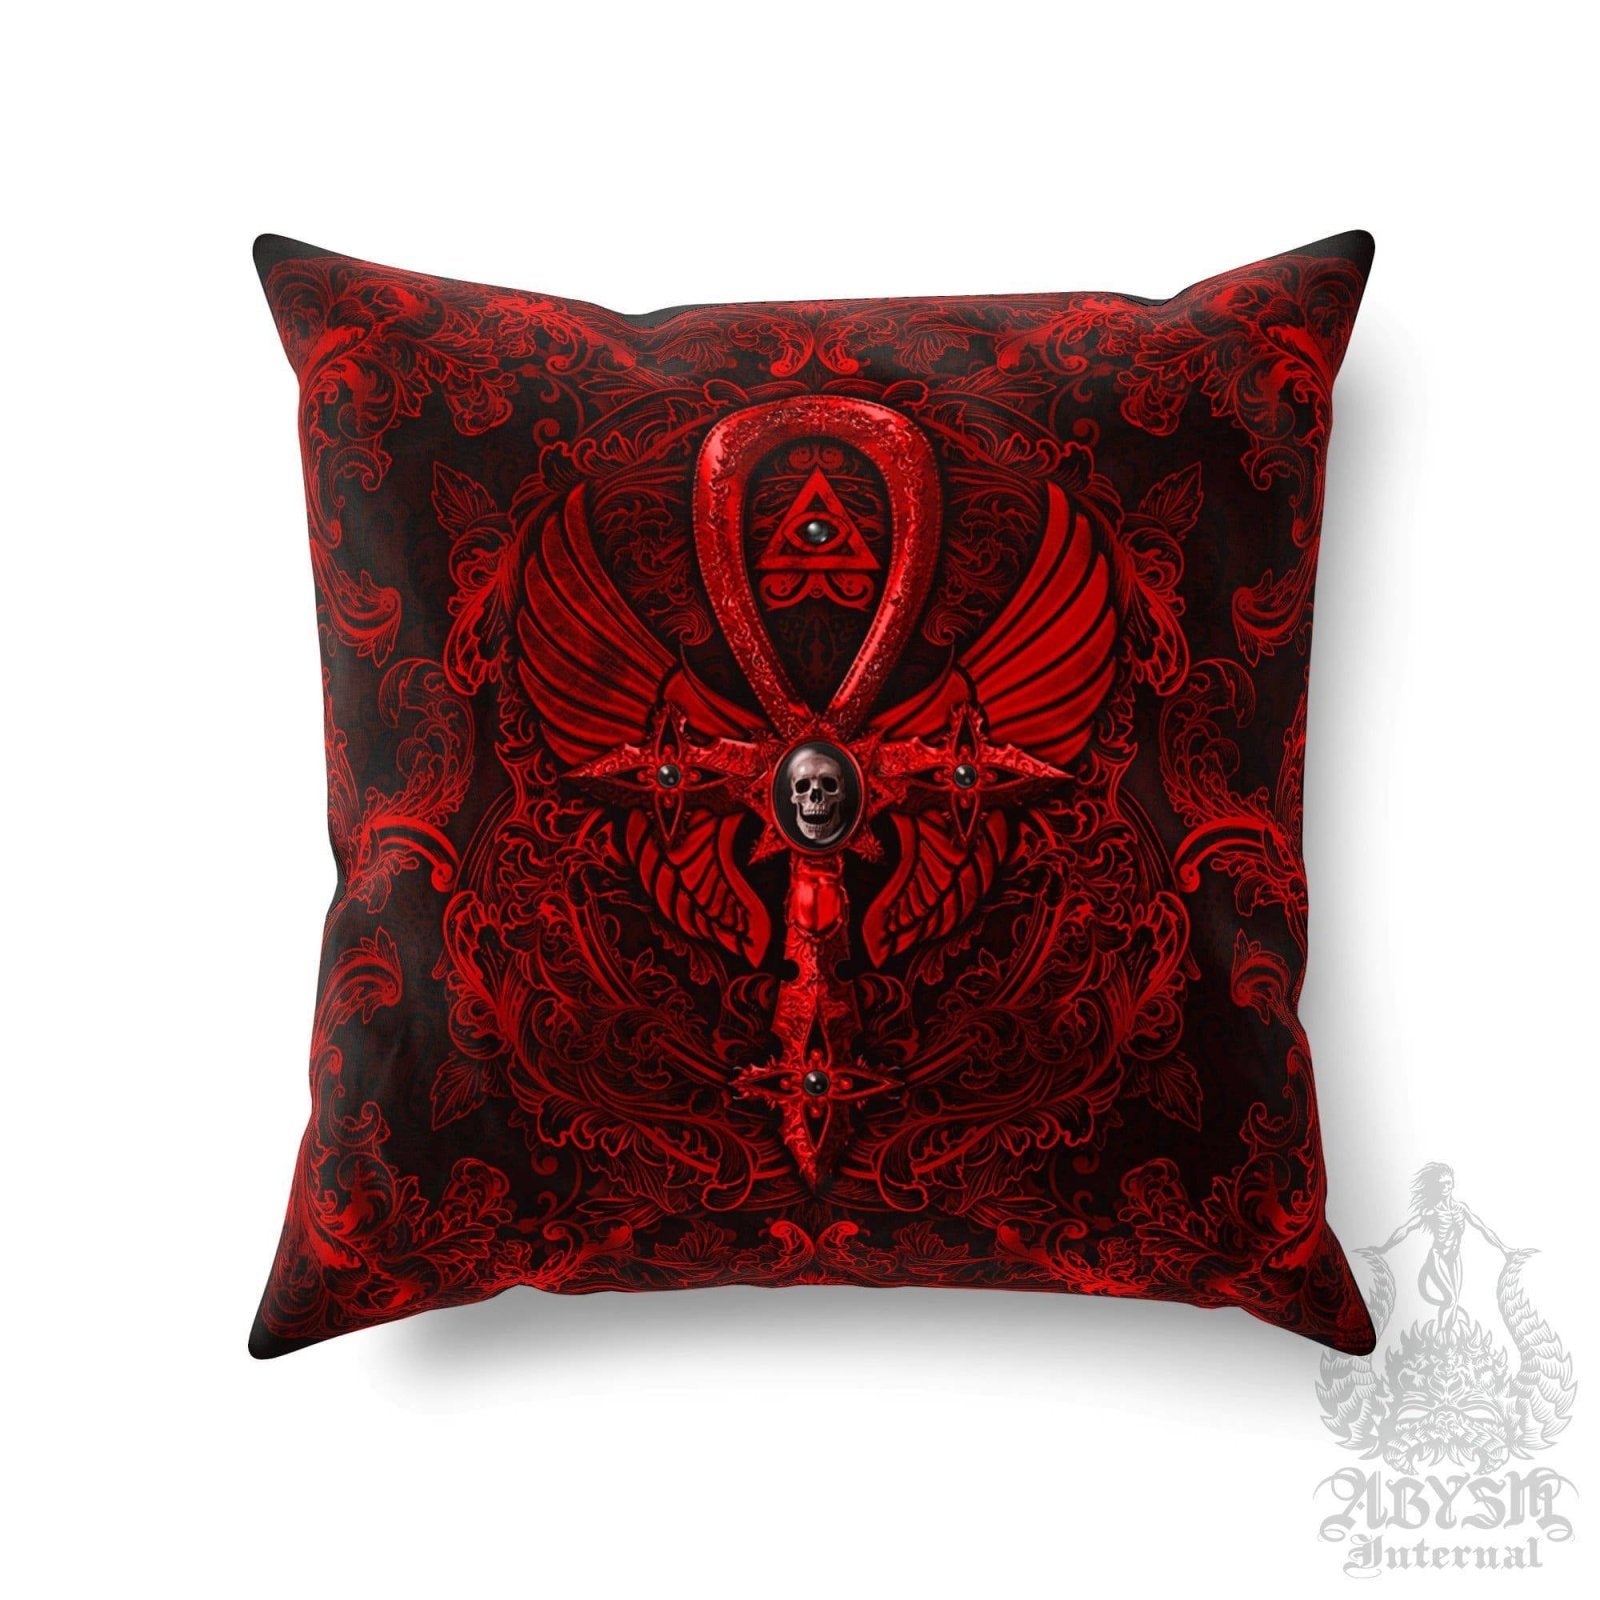 Gothic Throw Pillow, Decorative Accent Cushion, Goth Room Decor, Dark Art, Alternative Home - Ankh Cross, Dark bloody Red - Abysm Internal